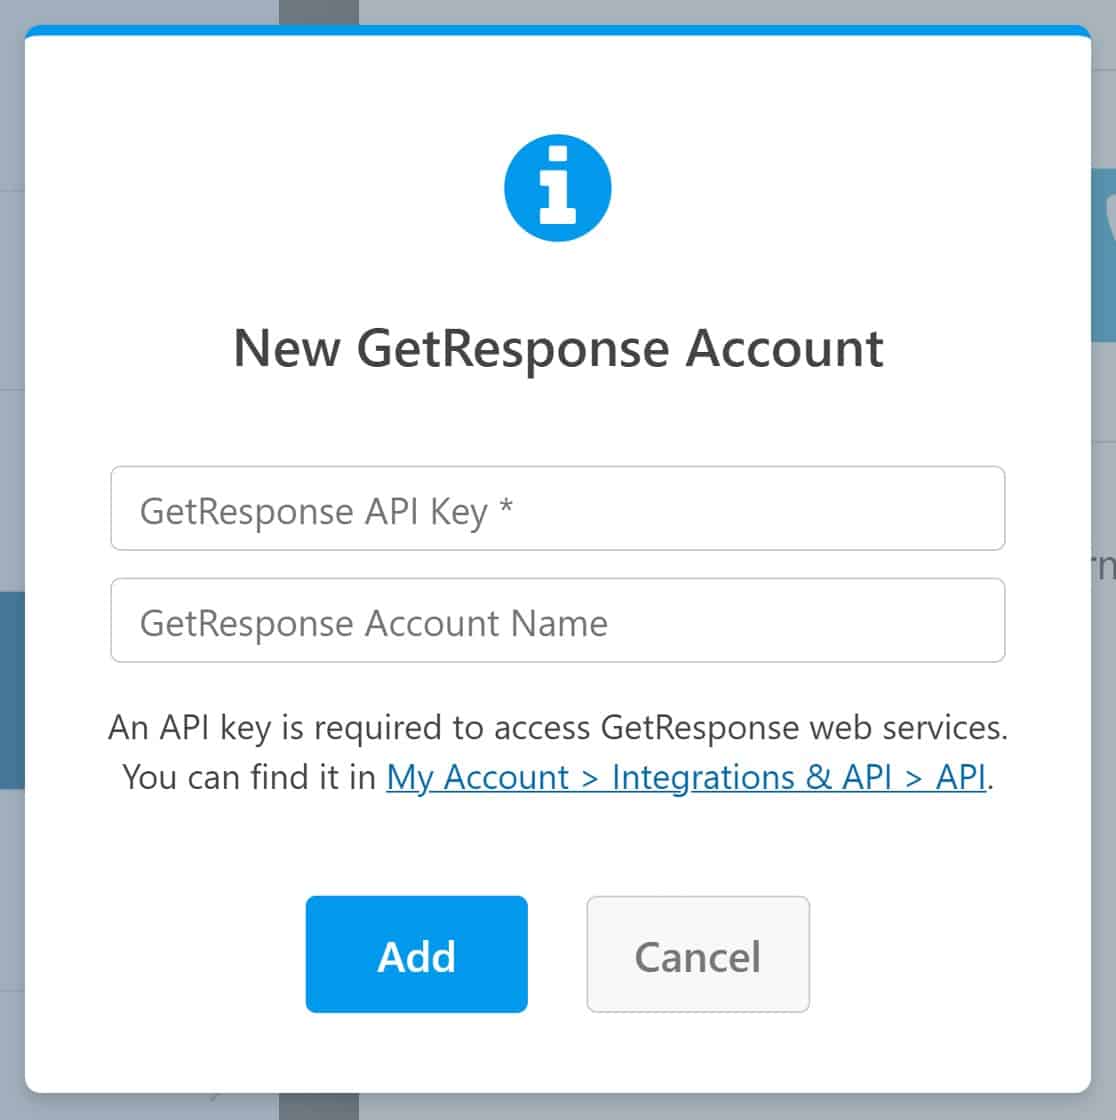 Enter GetResponse API and account name